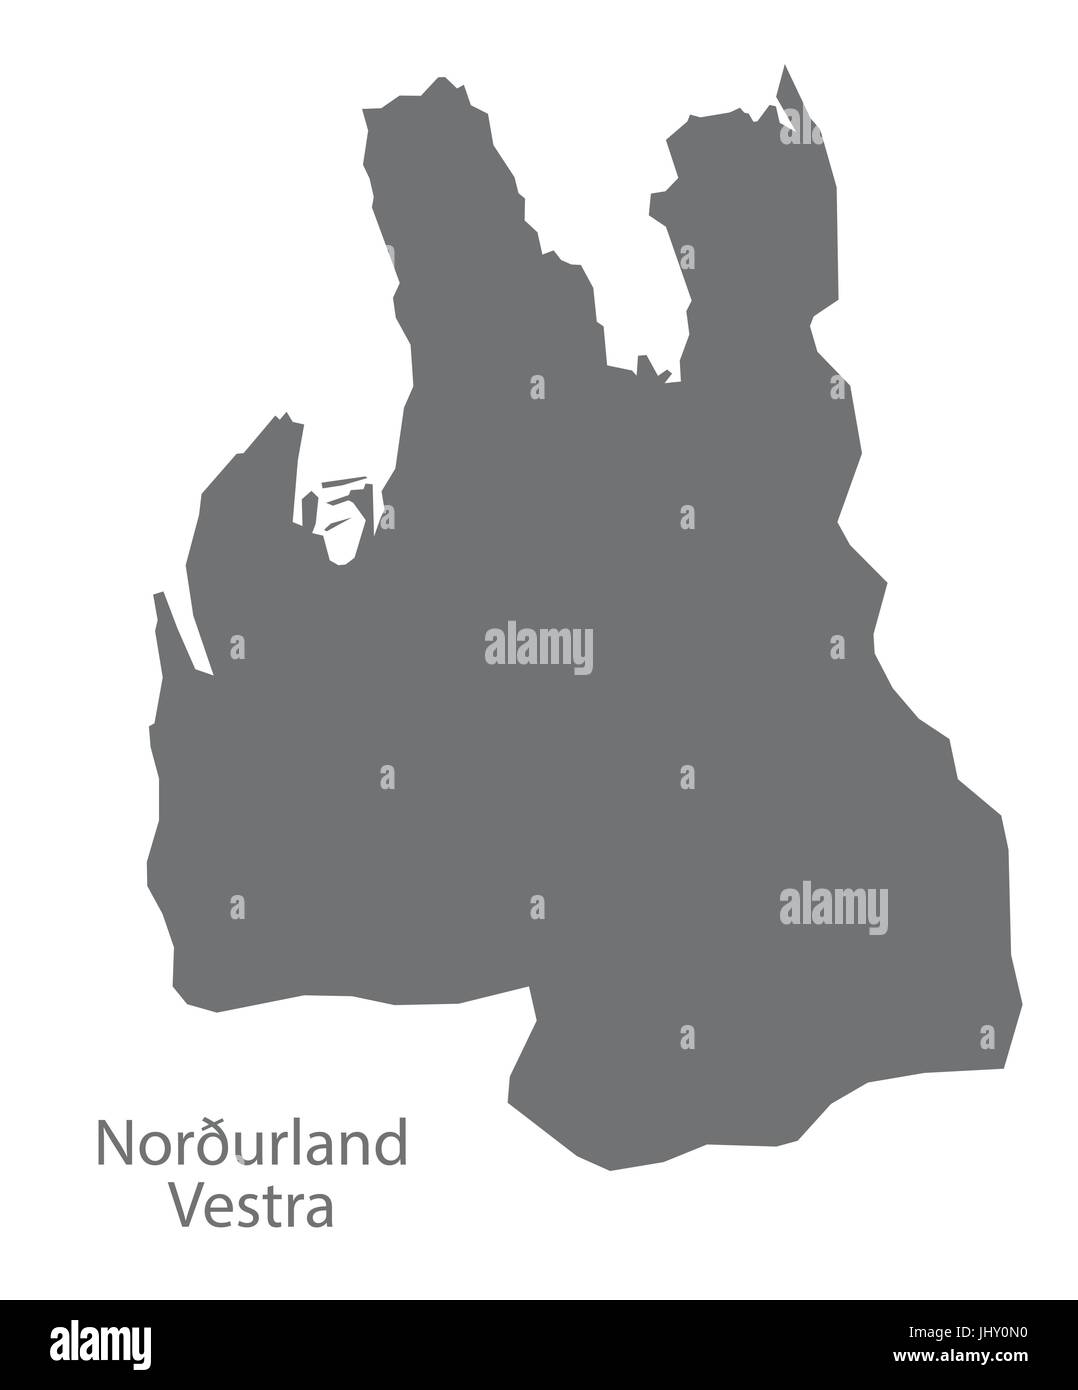 Nordurland Vestra Island Region Karte grau Abbildung Silhouette Form Stock Vektor